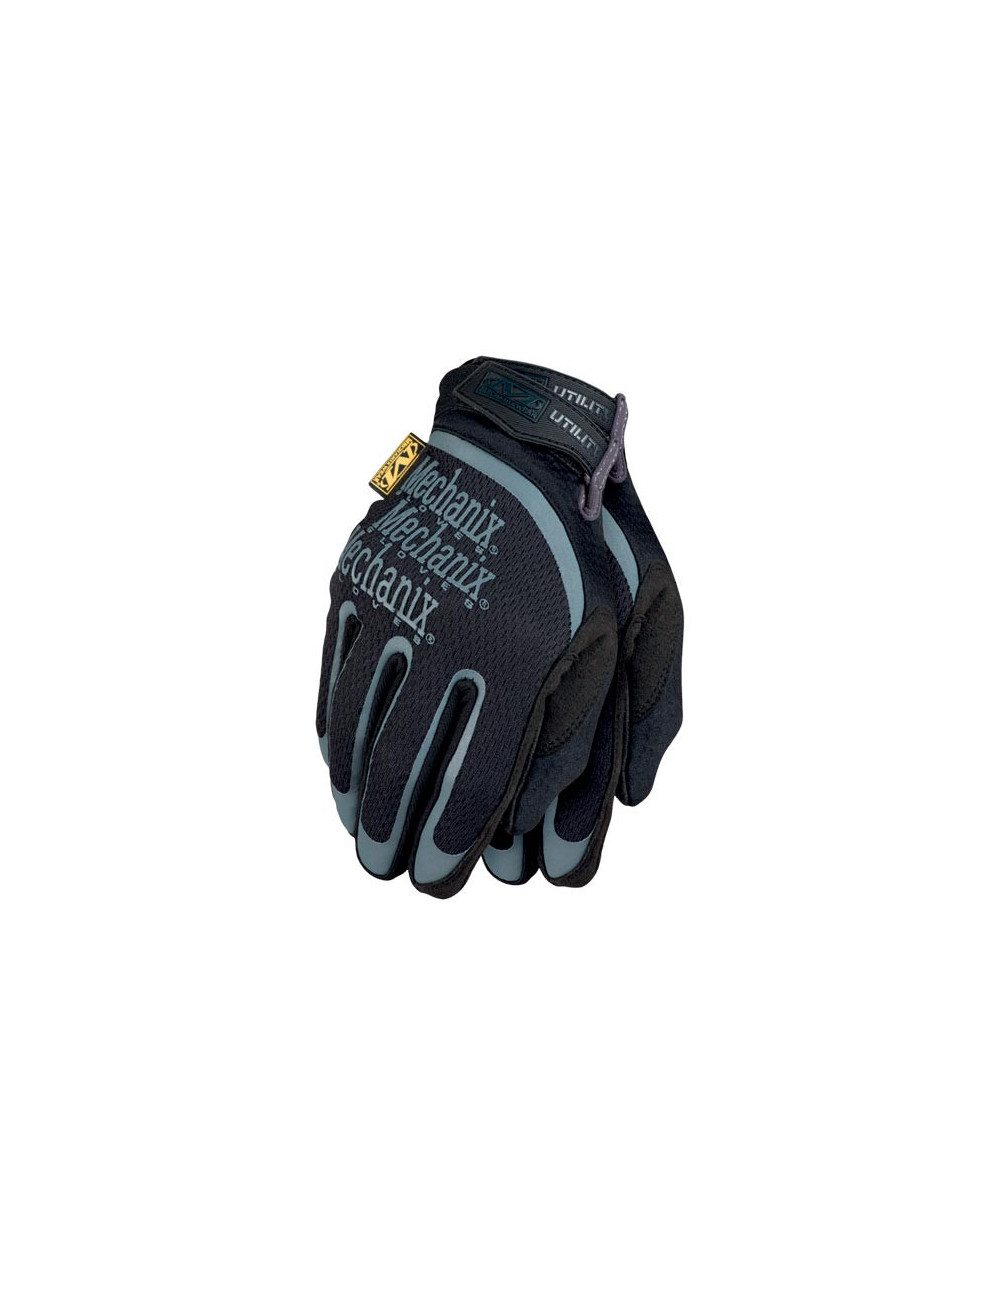 Protective gloves rm-utility bs black-grey Mechanix